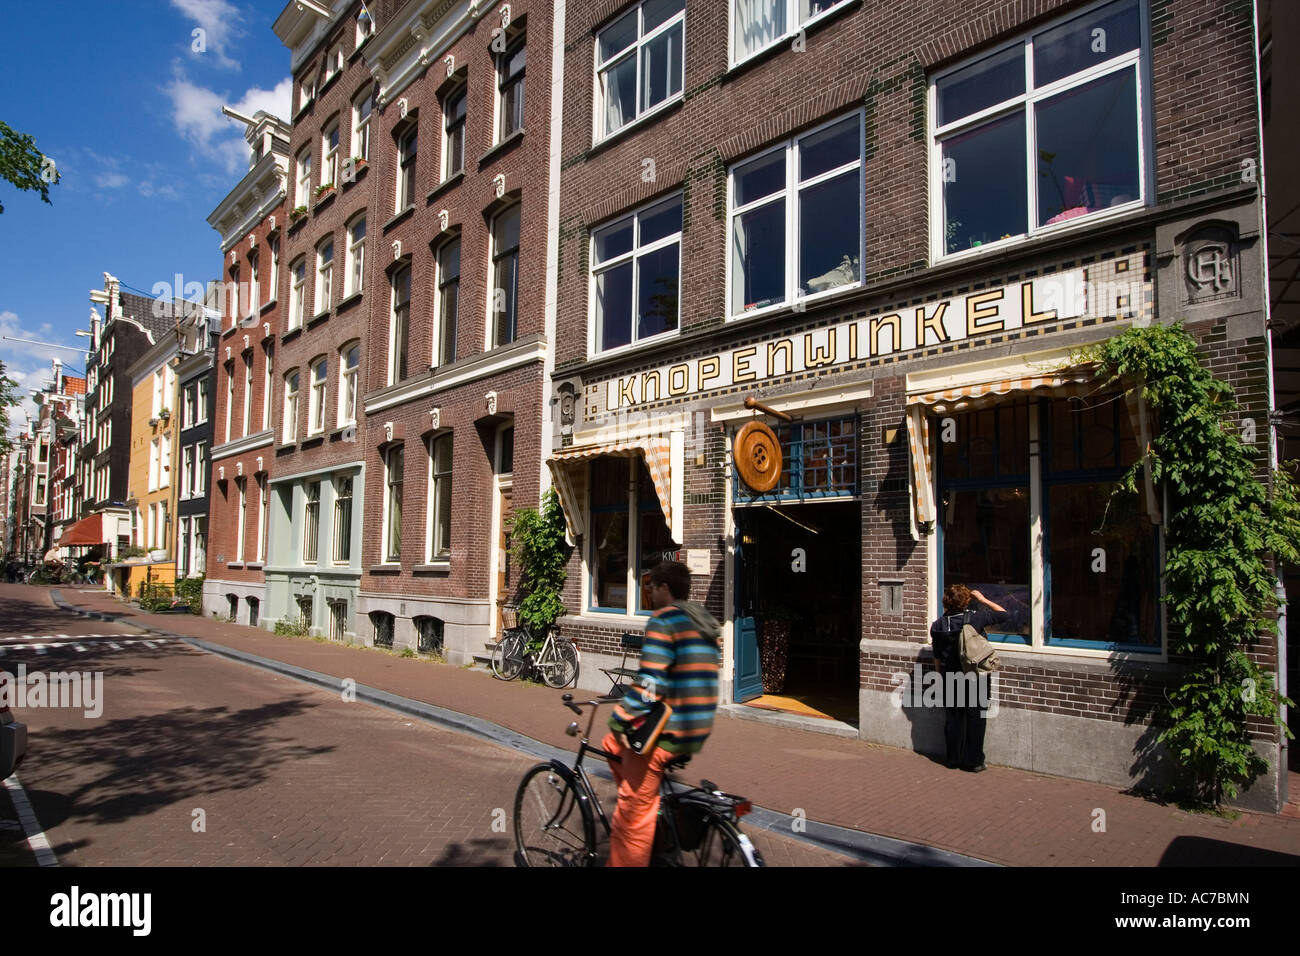 Amsterdam Knopenwinkel knop shop Stock Photo